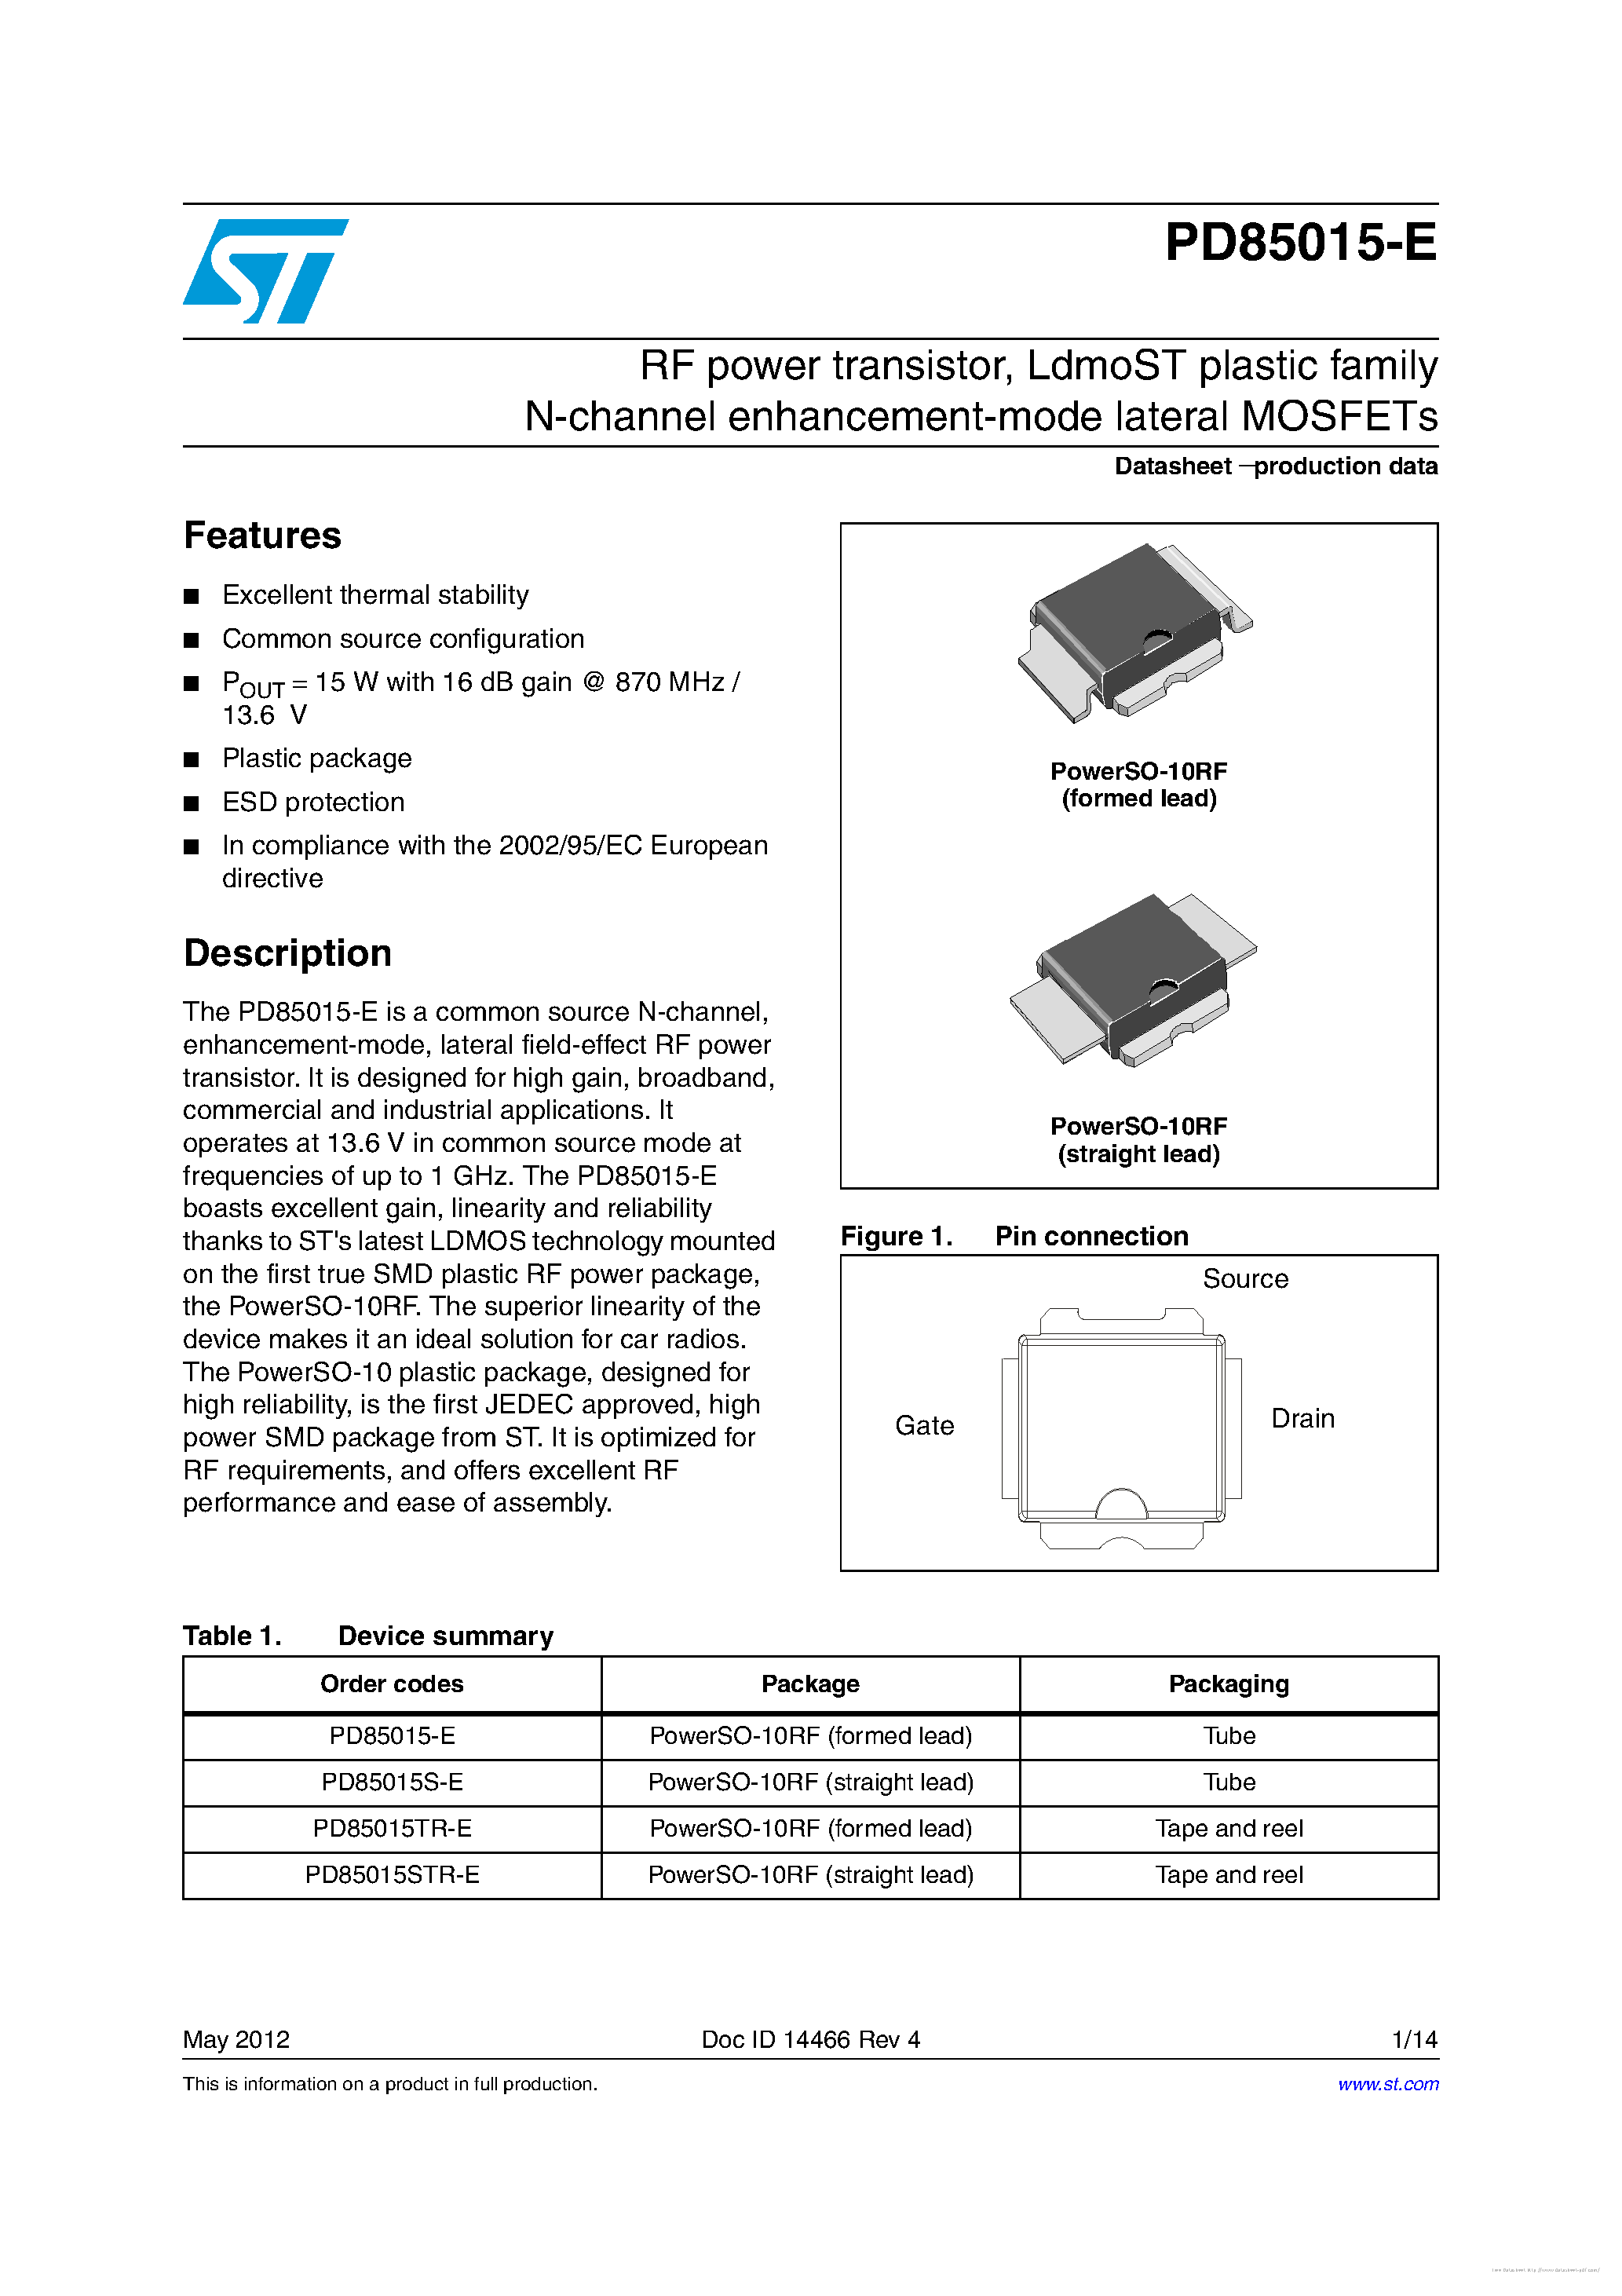 Datasheet PD85015-E - page 1